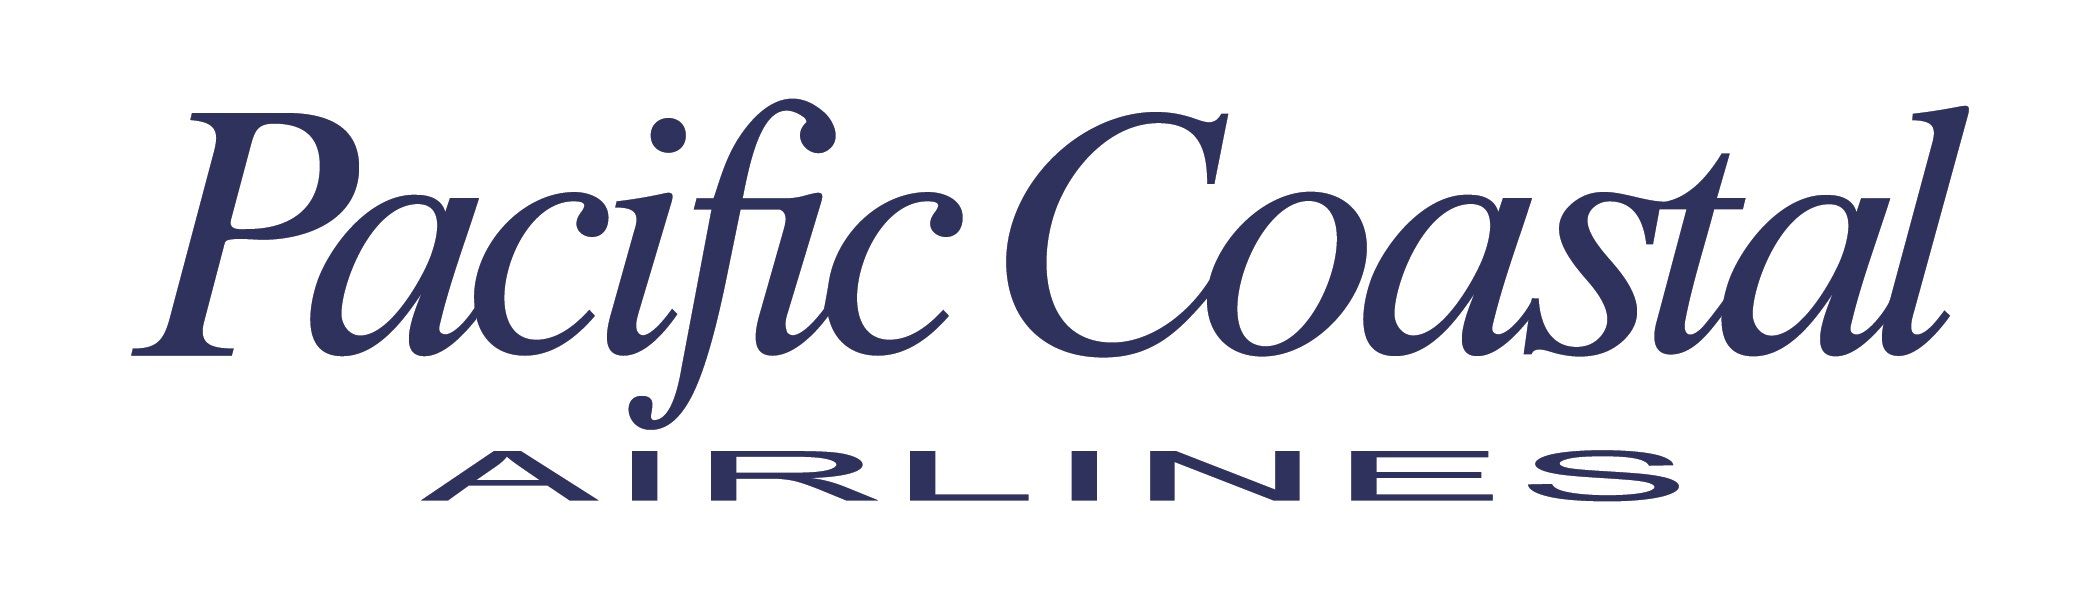 Pacific Coastal Airl